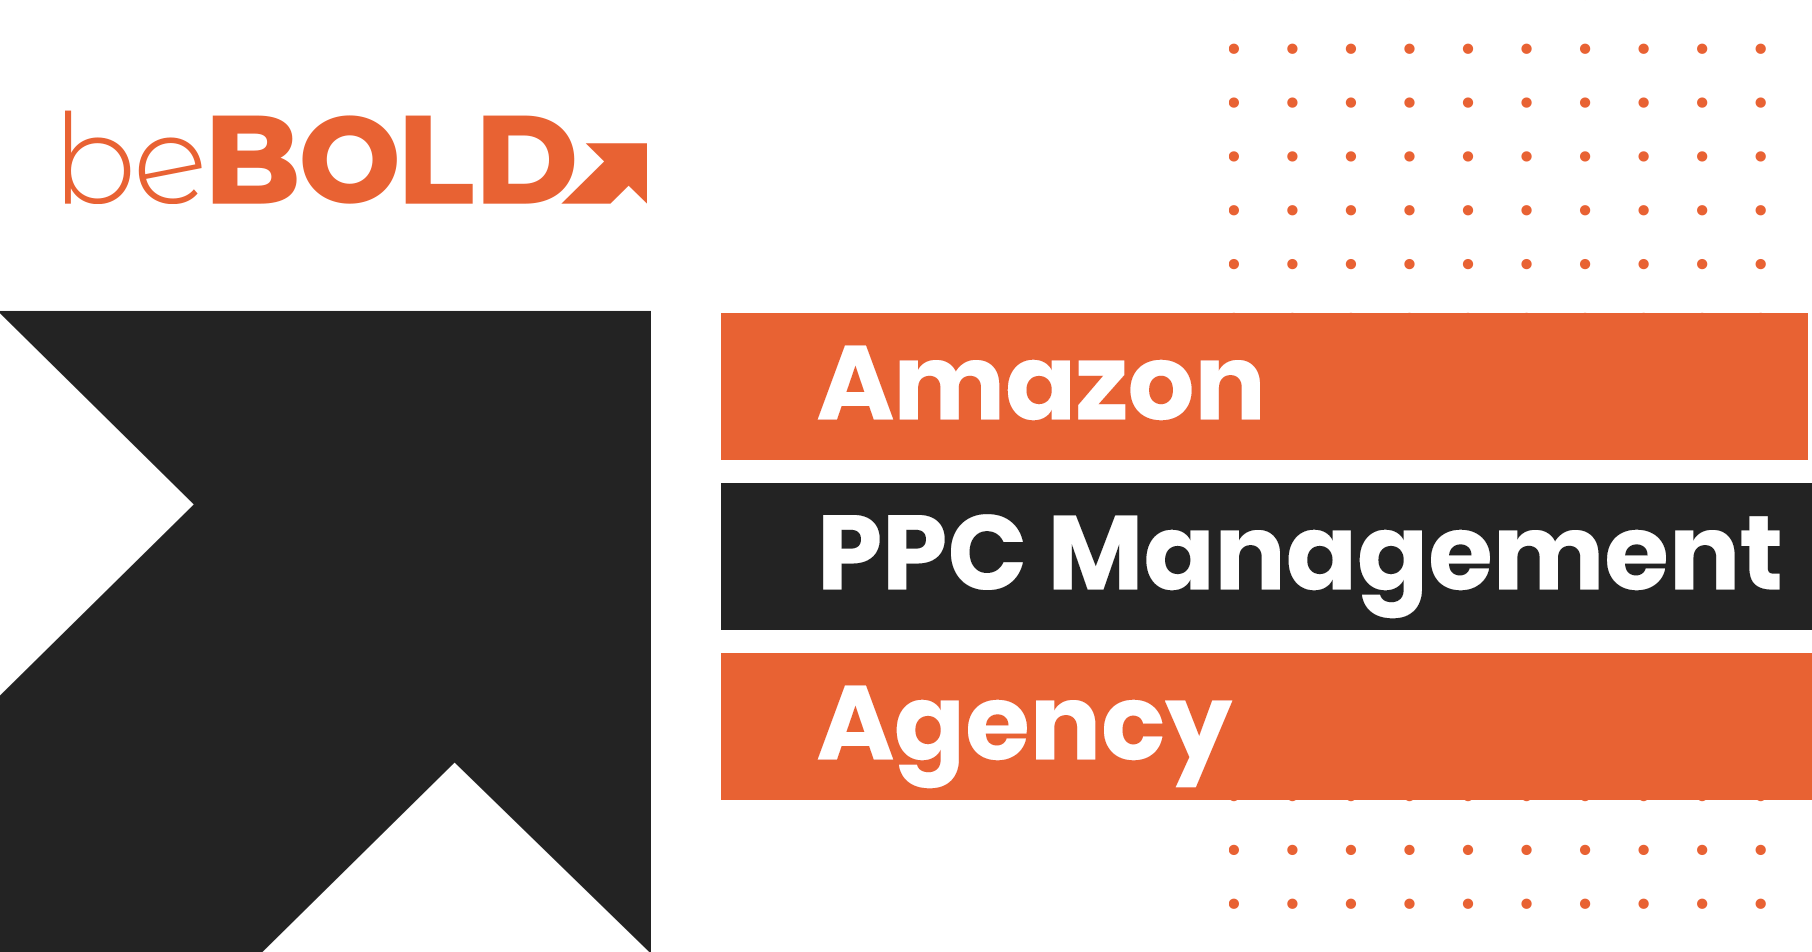 Amazon PPC Management Agency beBOLD